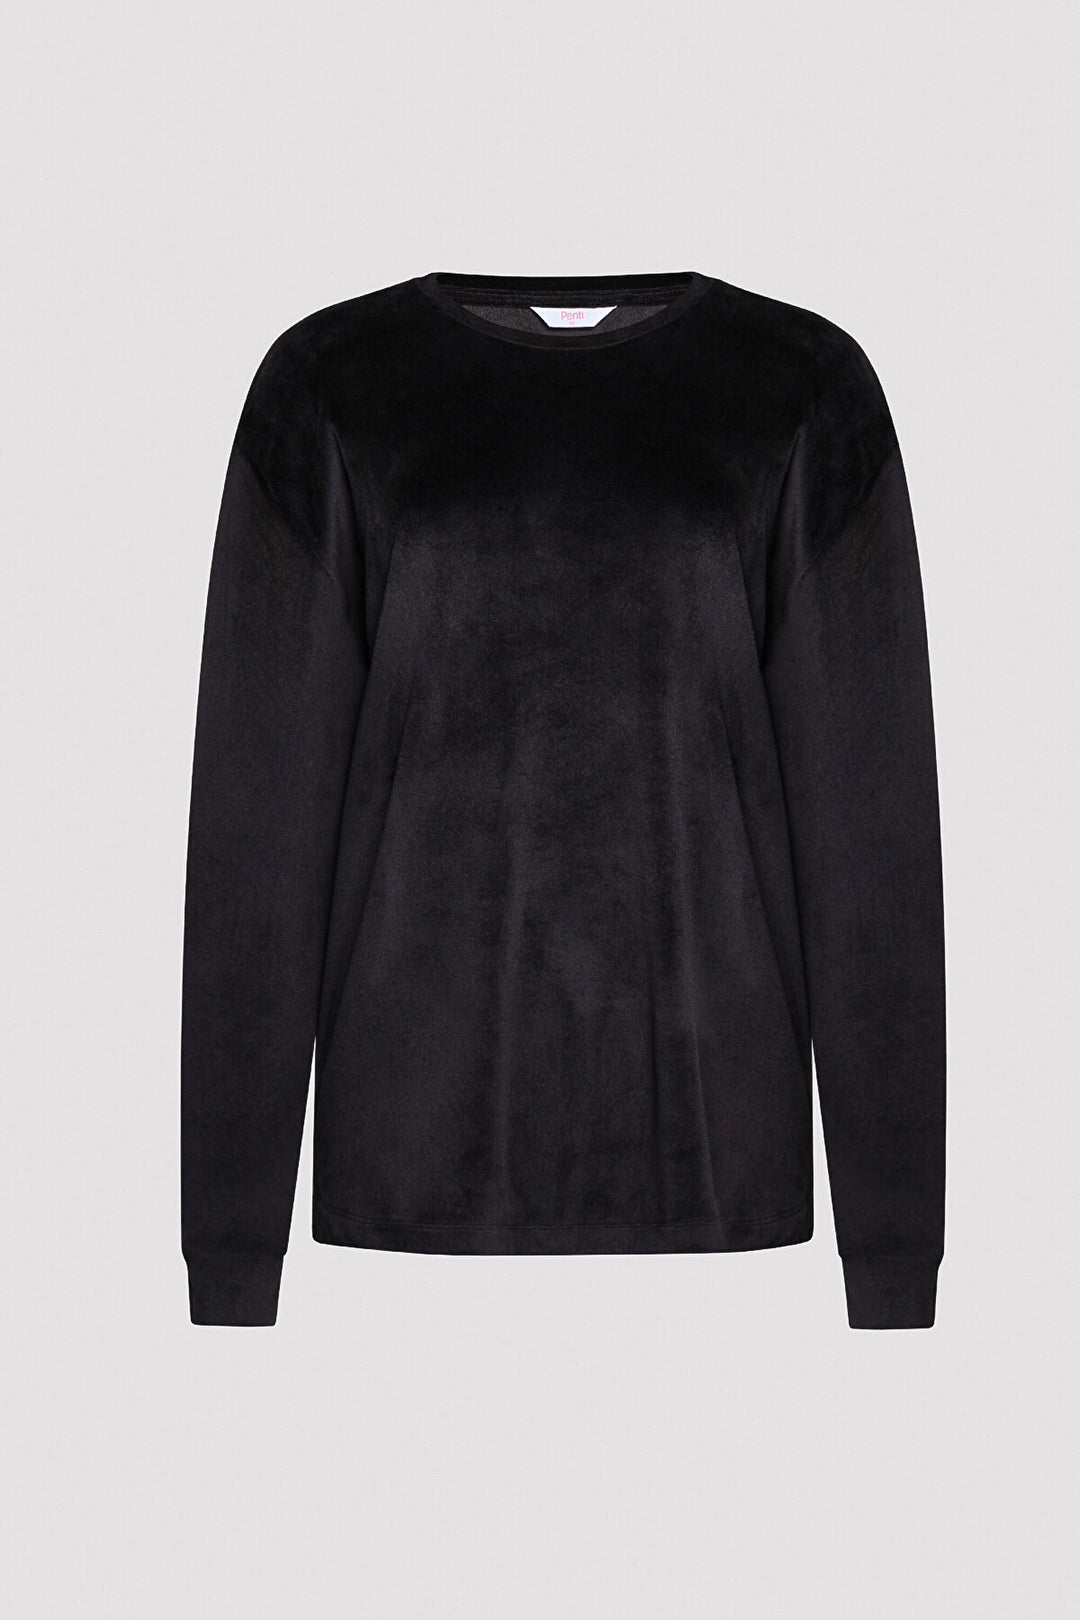 Black Fuzzy Sweatshirt PJ Top